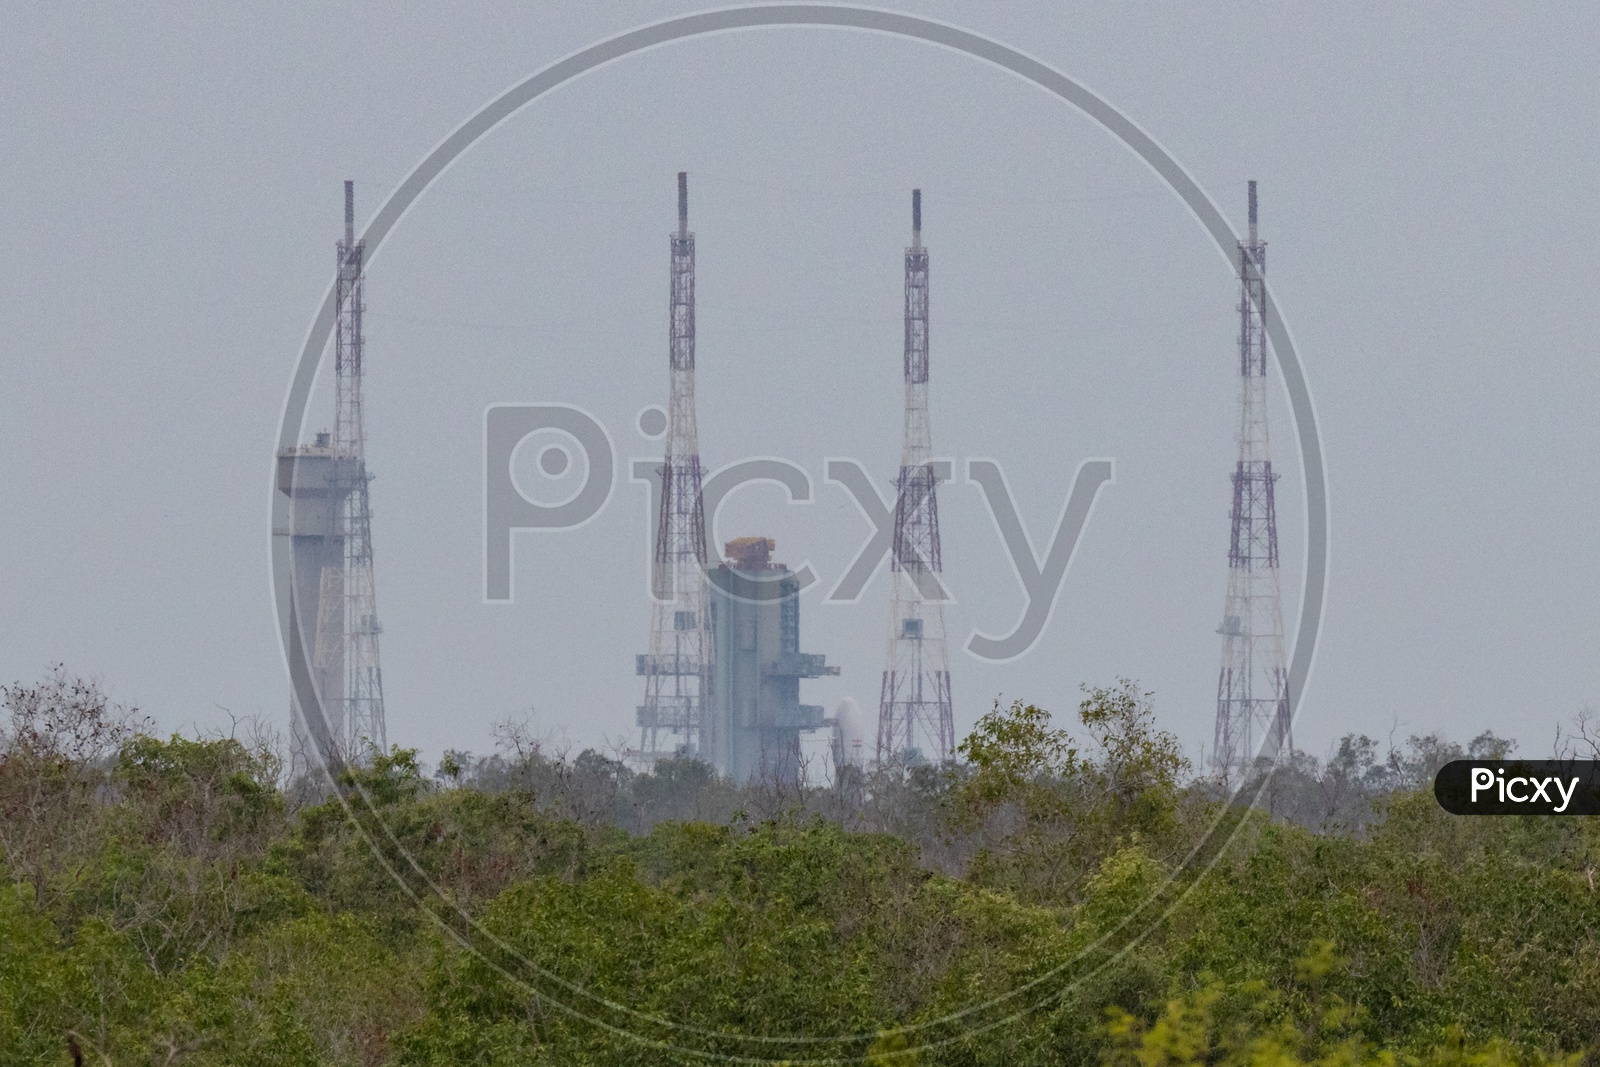 GSLV Mk III  M1  Or Chandrayaan 2  Spacecraft or Rocket On  Launch pad  At Satish Dhawan Space Centre  SHAR In Sriharikota